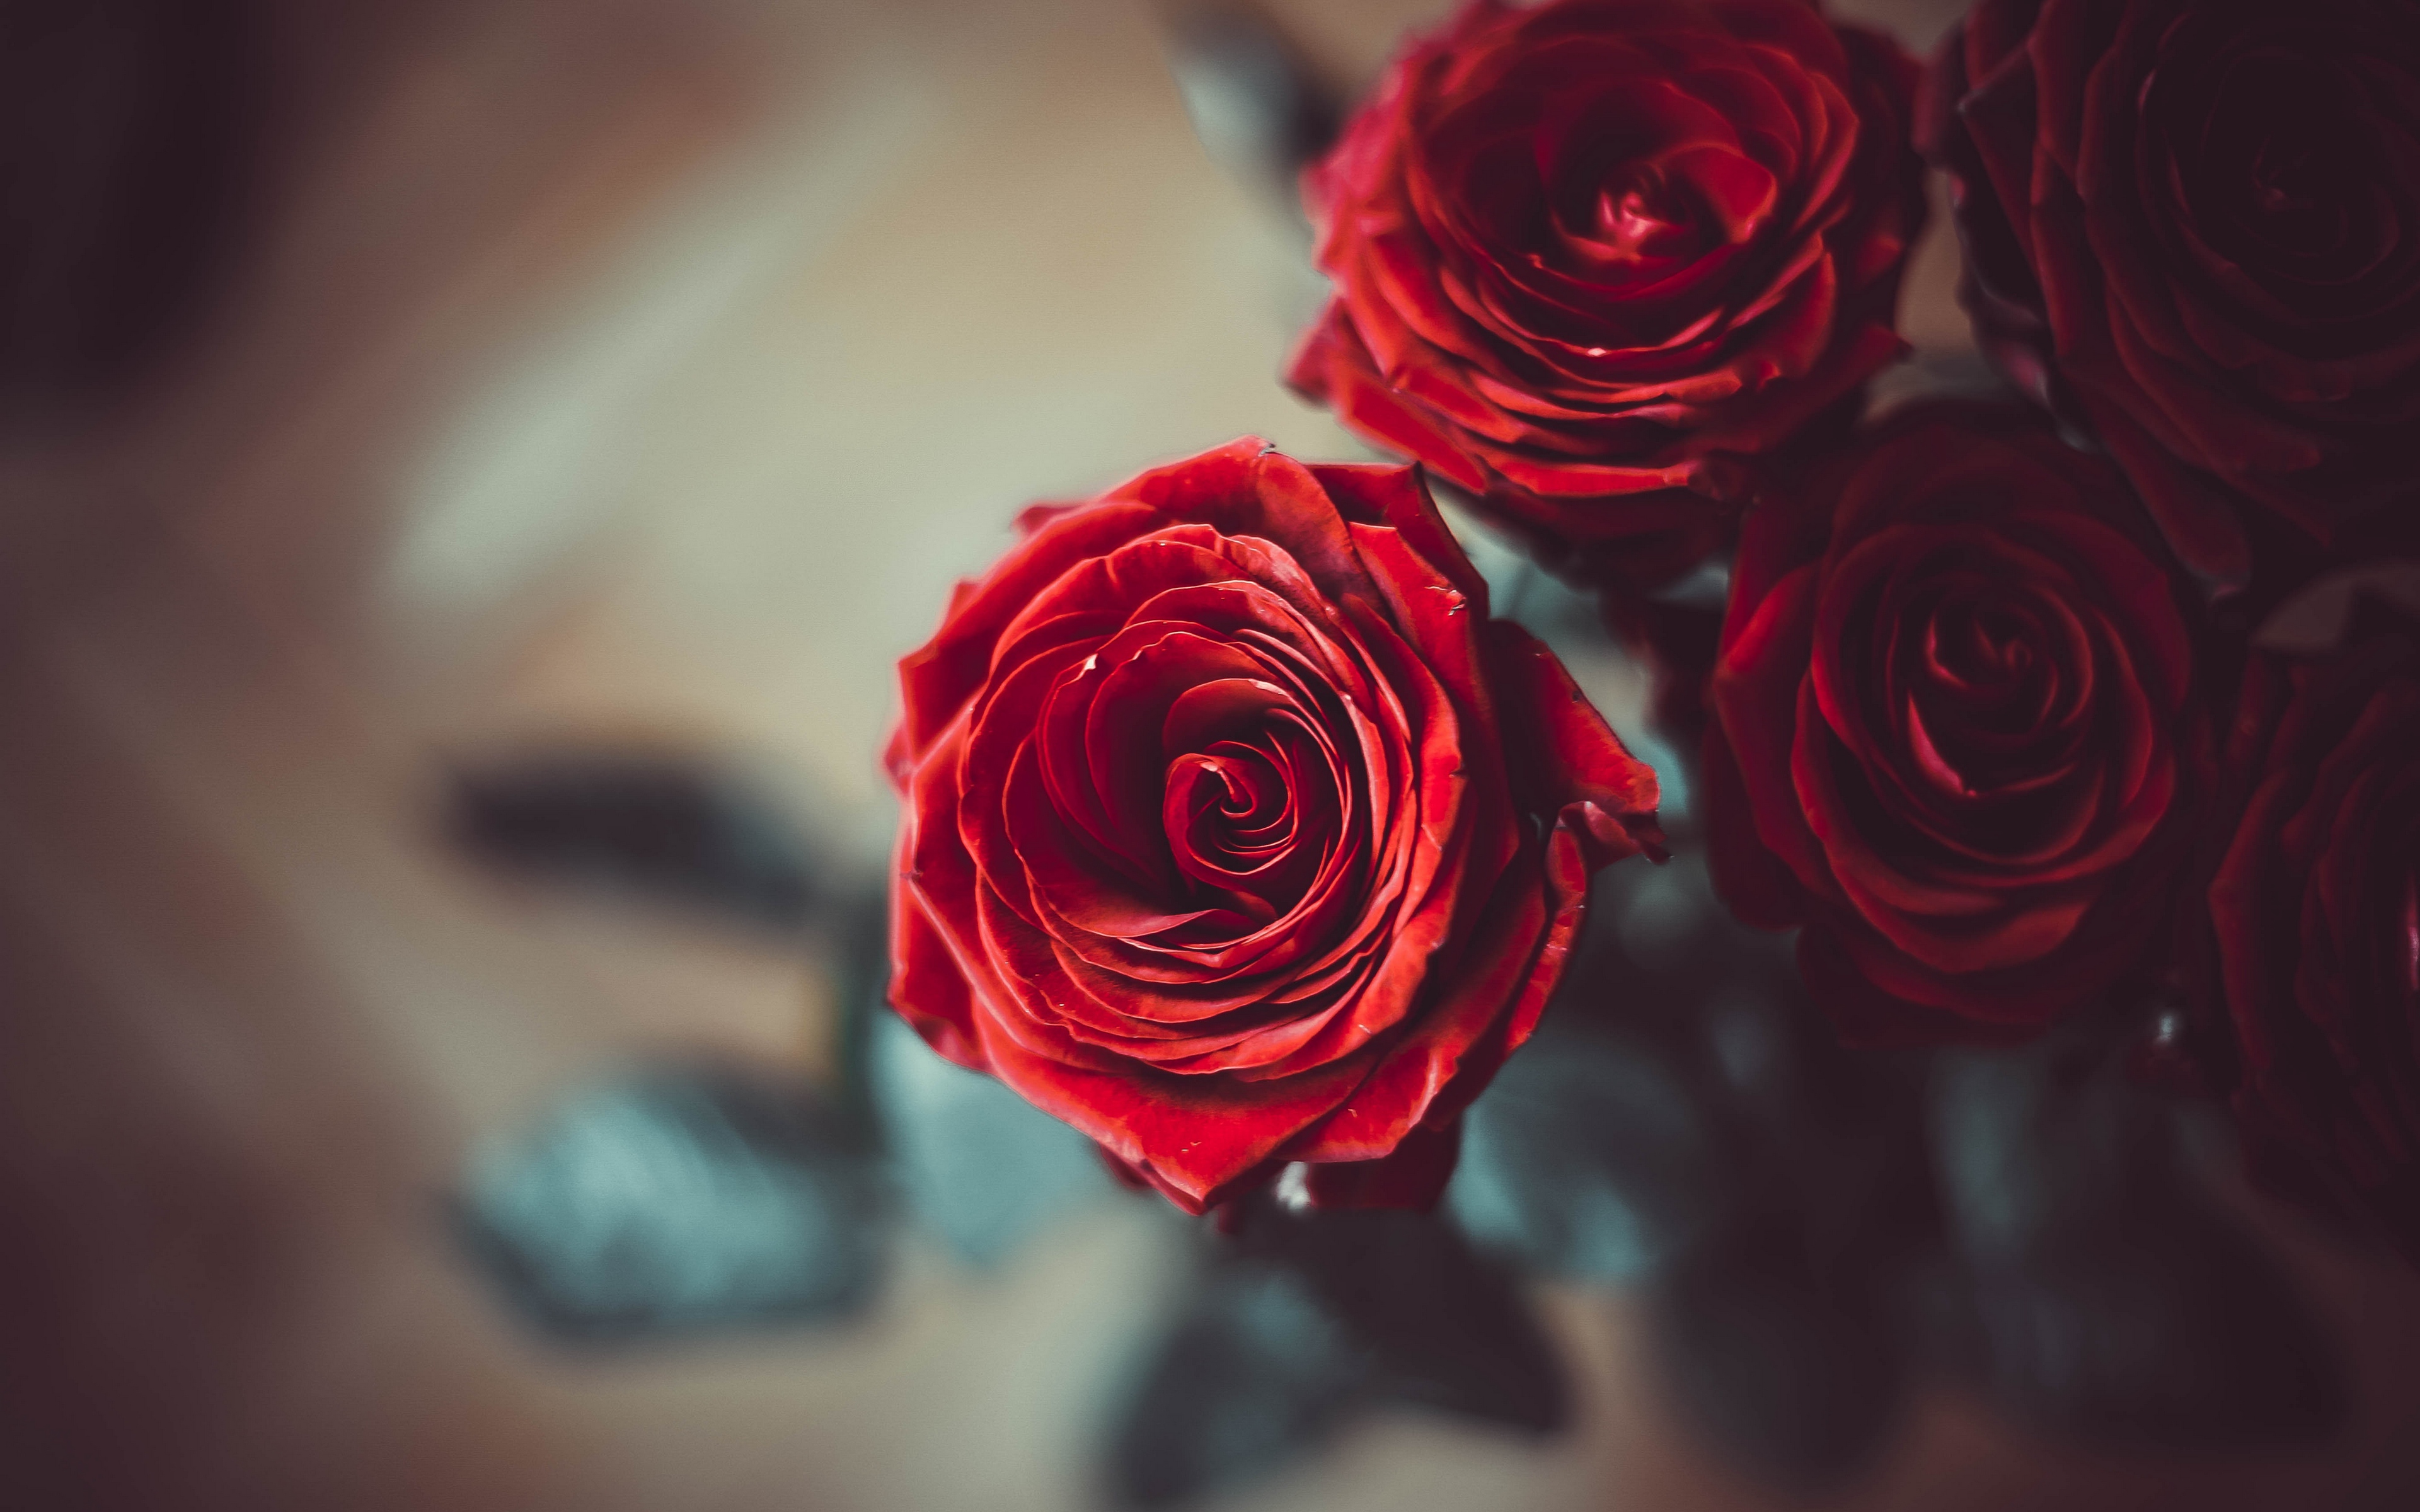 Red Rose Petals 4k Ultra HD Wallpaper | Background Image ...